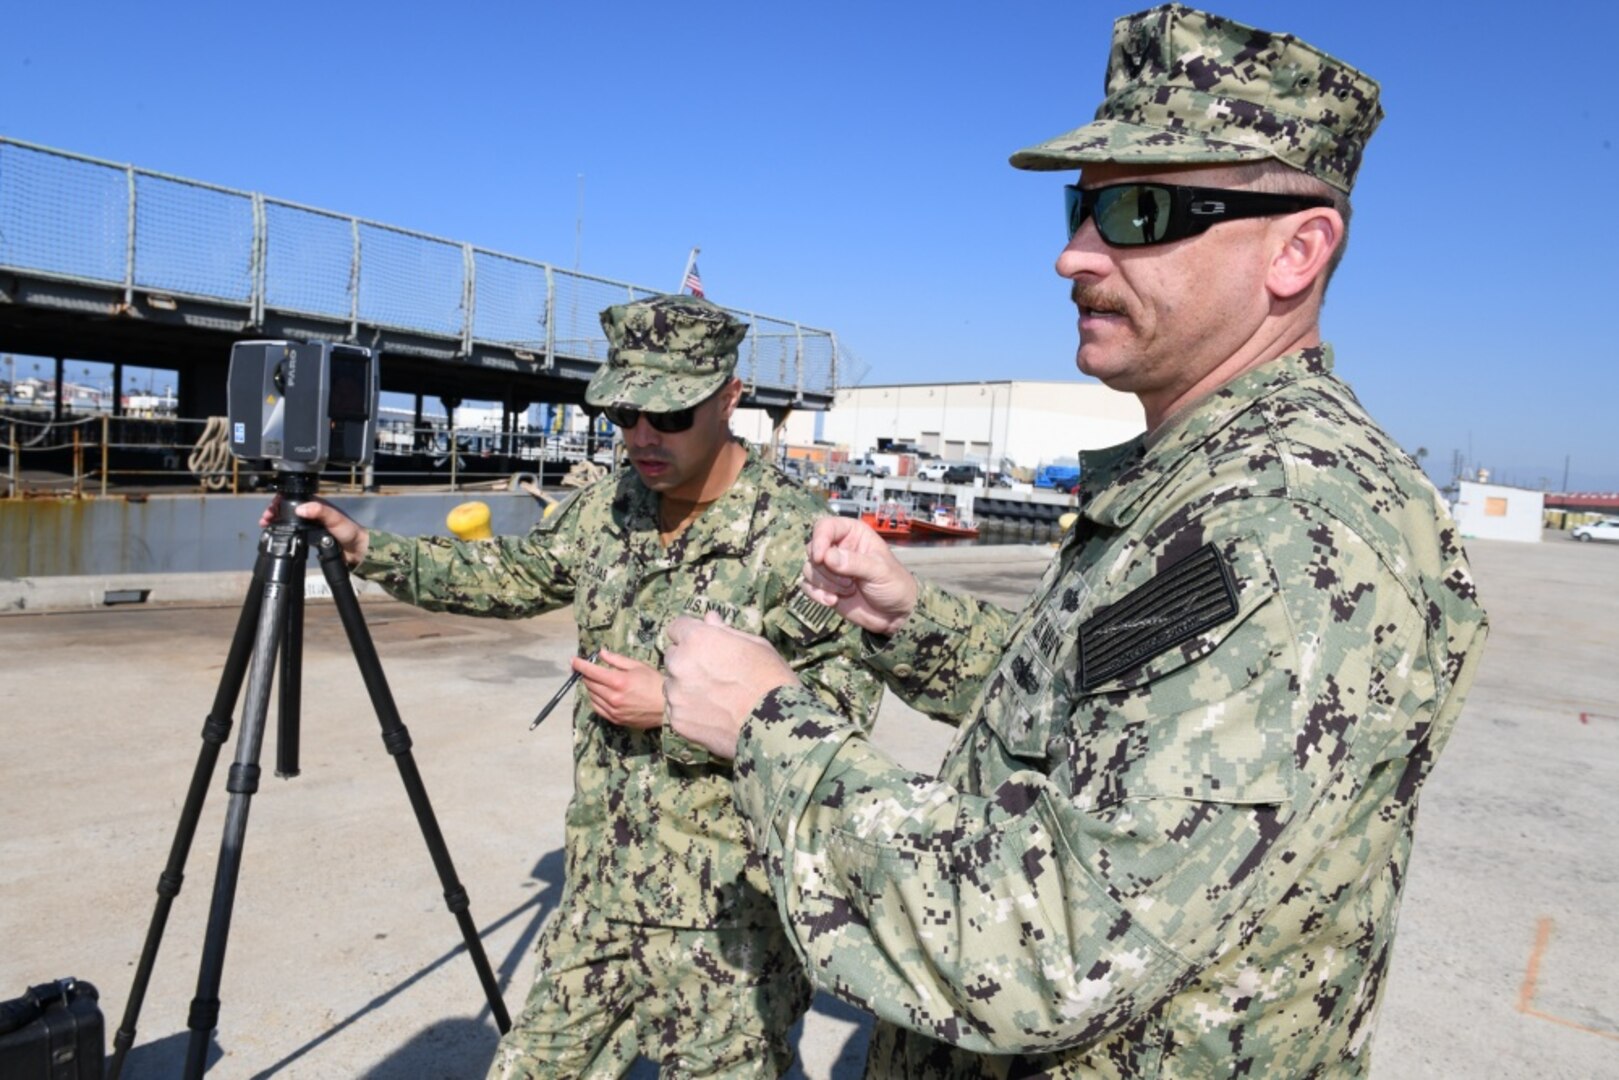 LIDAR scanning the Self Defense Test Ship at Naval Surface Warfare Center